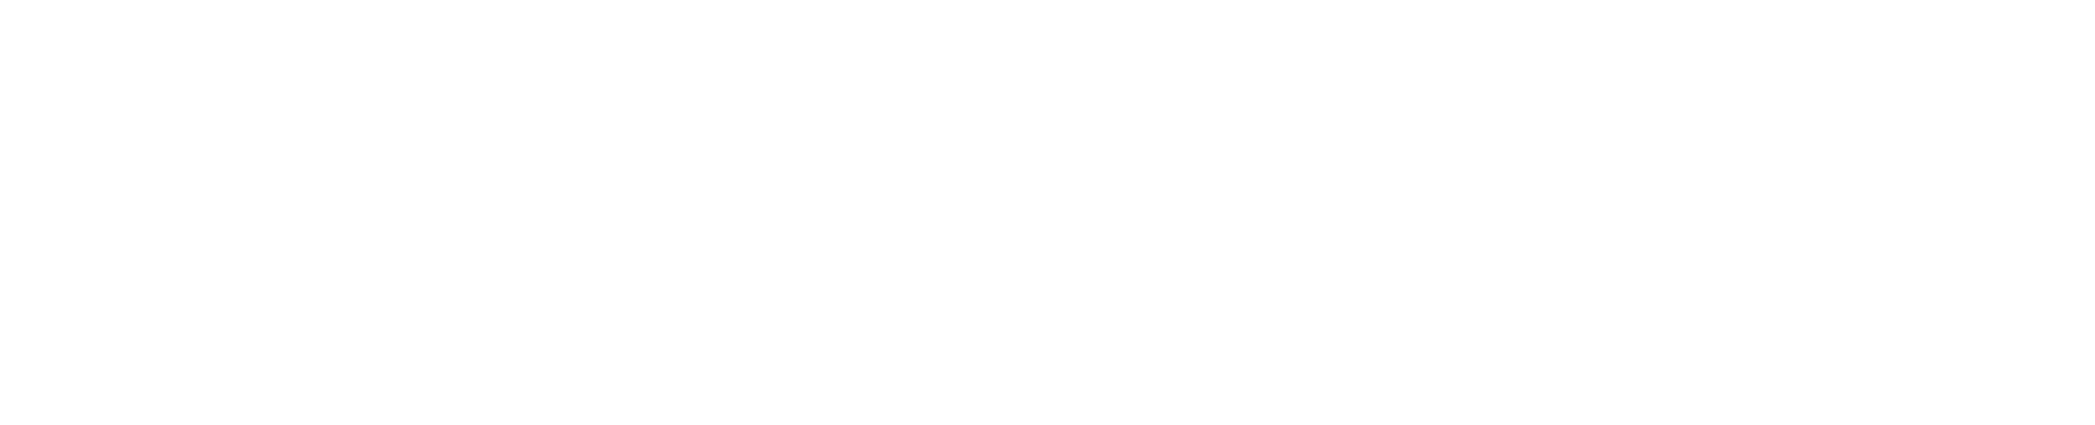 B2B Marketing Leaders Logo SYDNEY white text